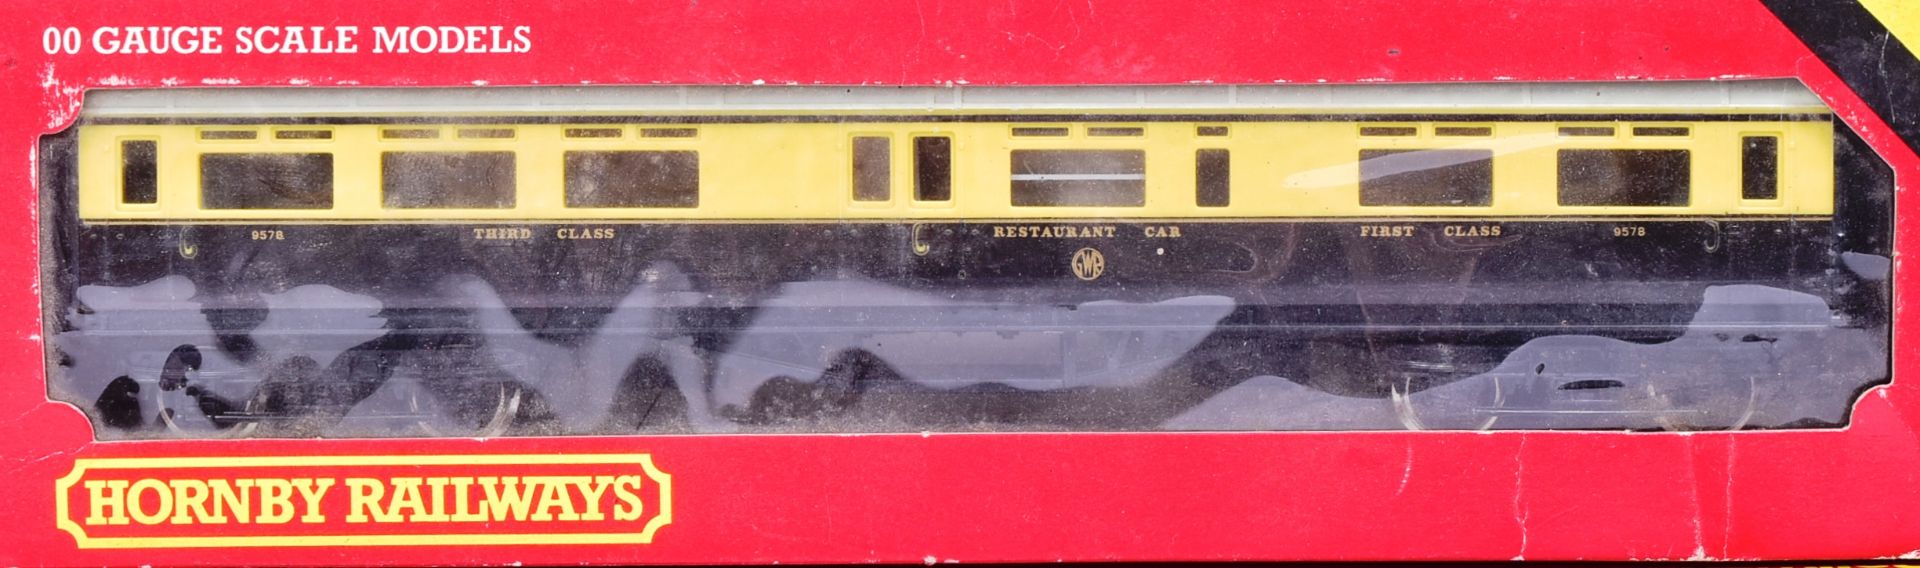 MODEL RAILWAY - ALBERT HALL LOCO & X3 GWR COACHES - Image 4 of 6